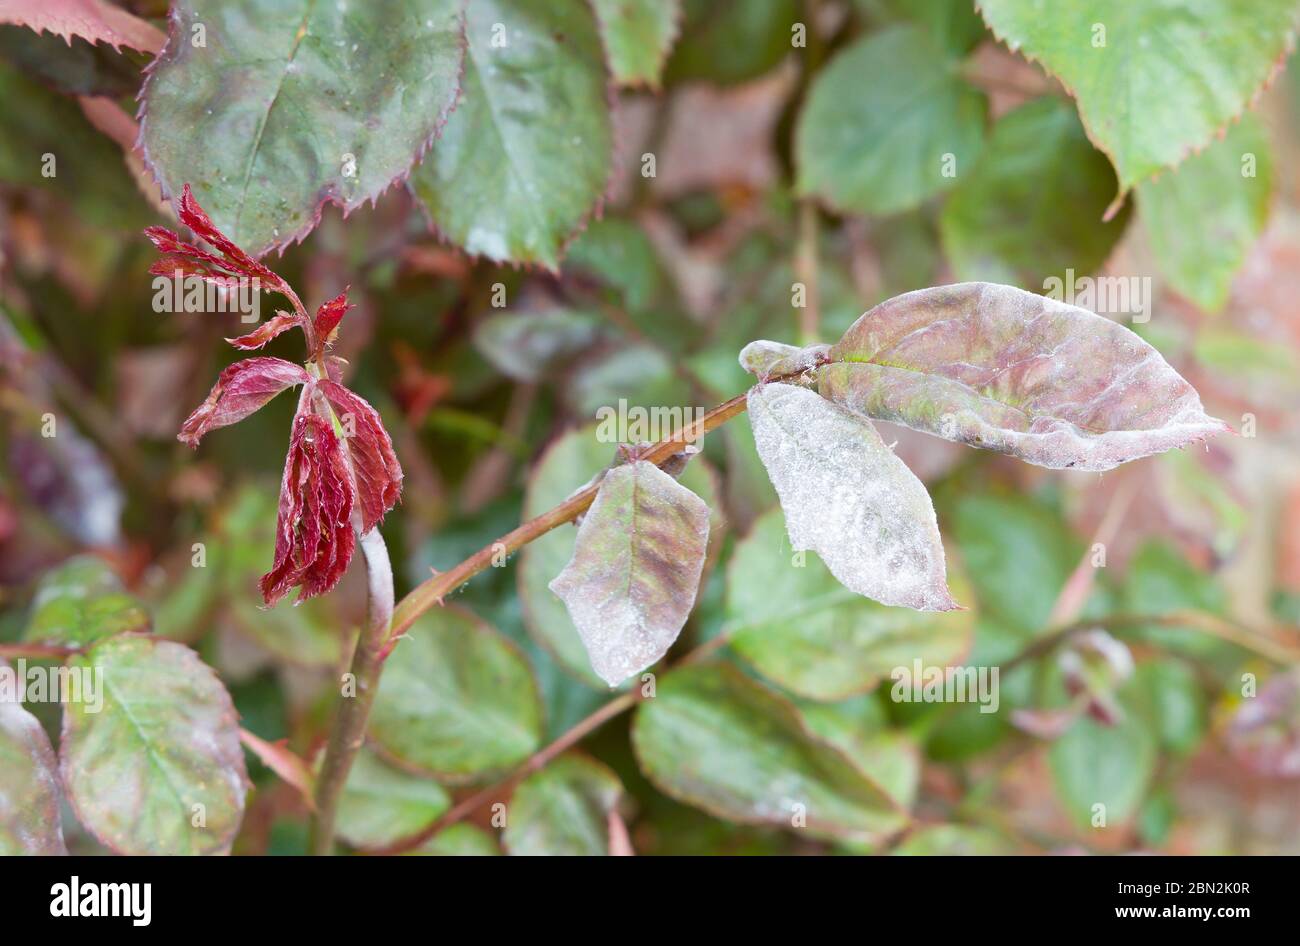 Powdery mildew (podosphaera pannosa) on roses in a garden, fungal disease on rose leaf, UK Stock Photo